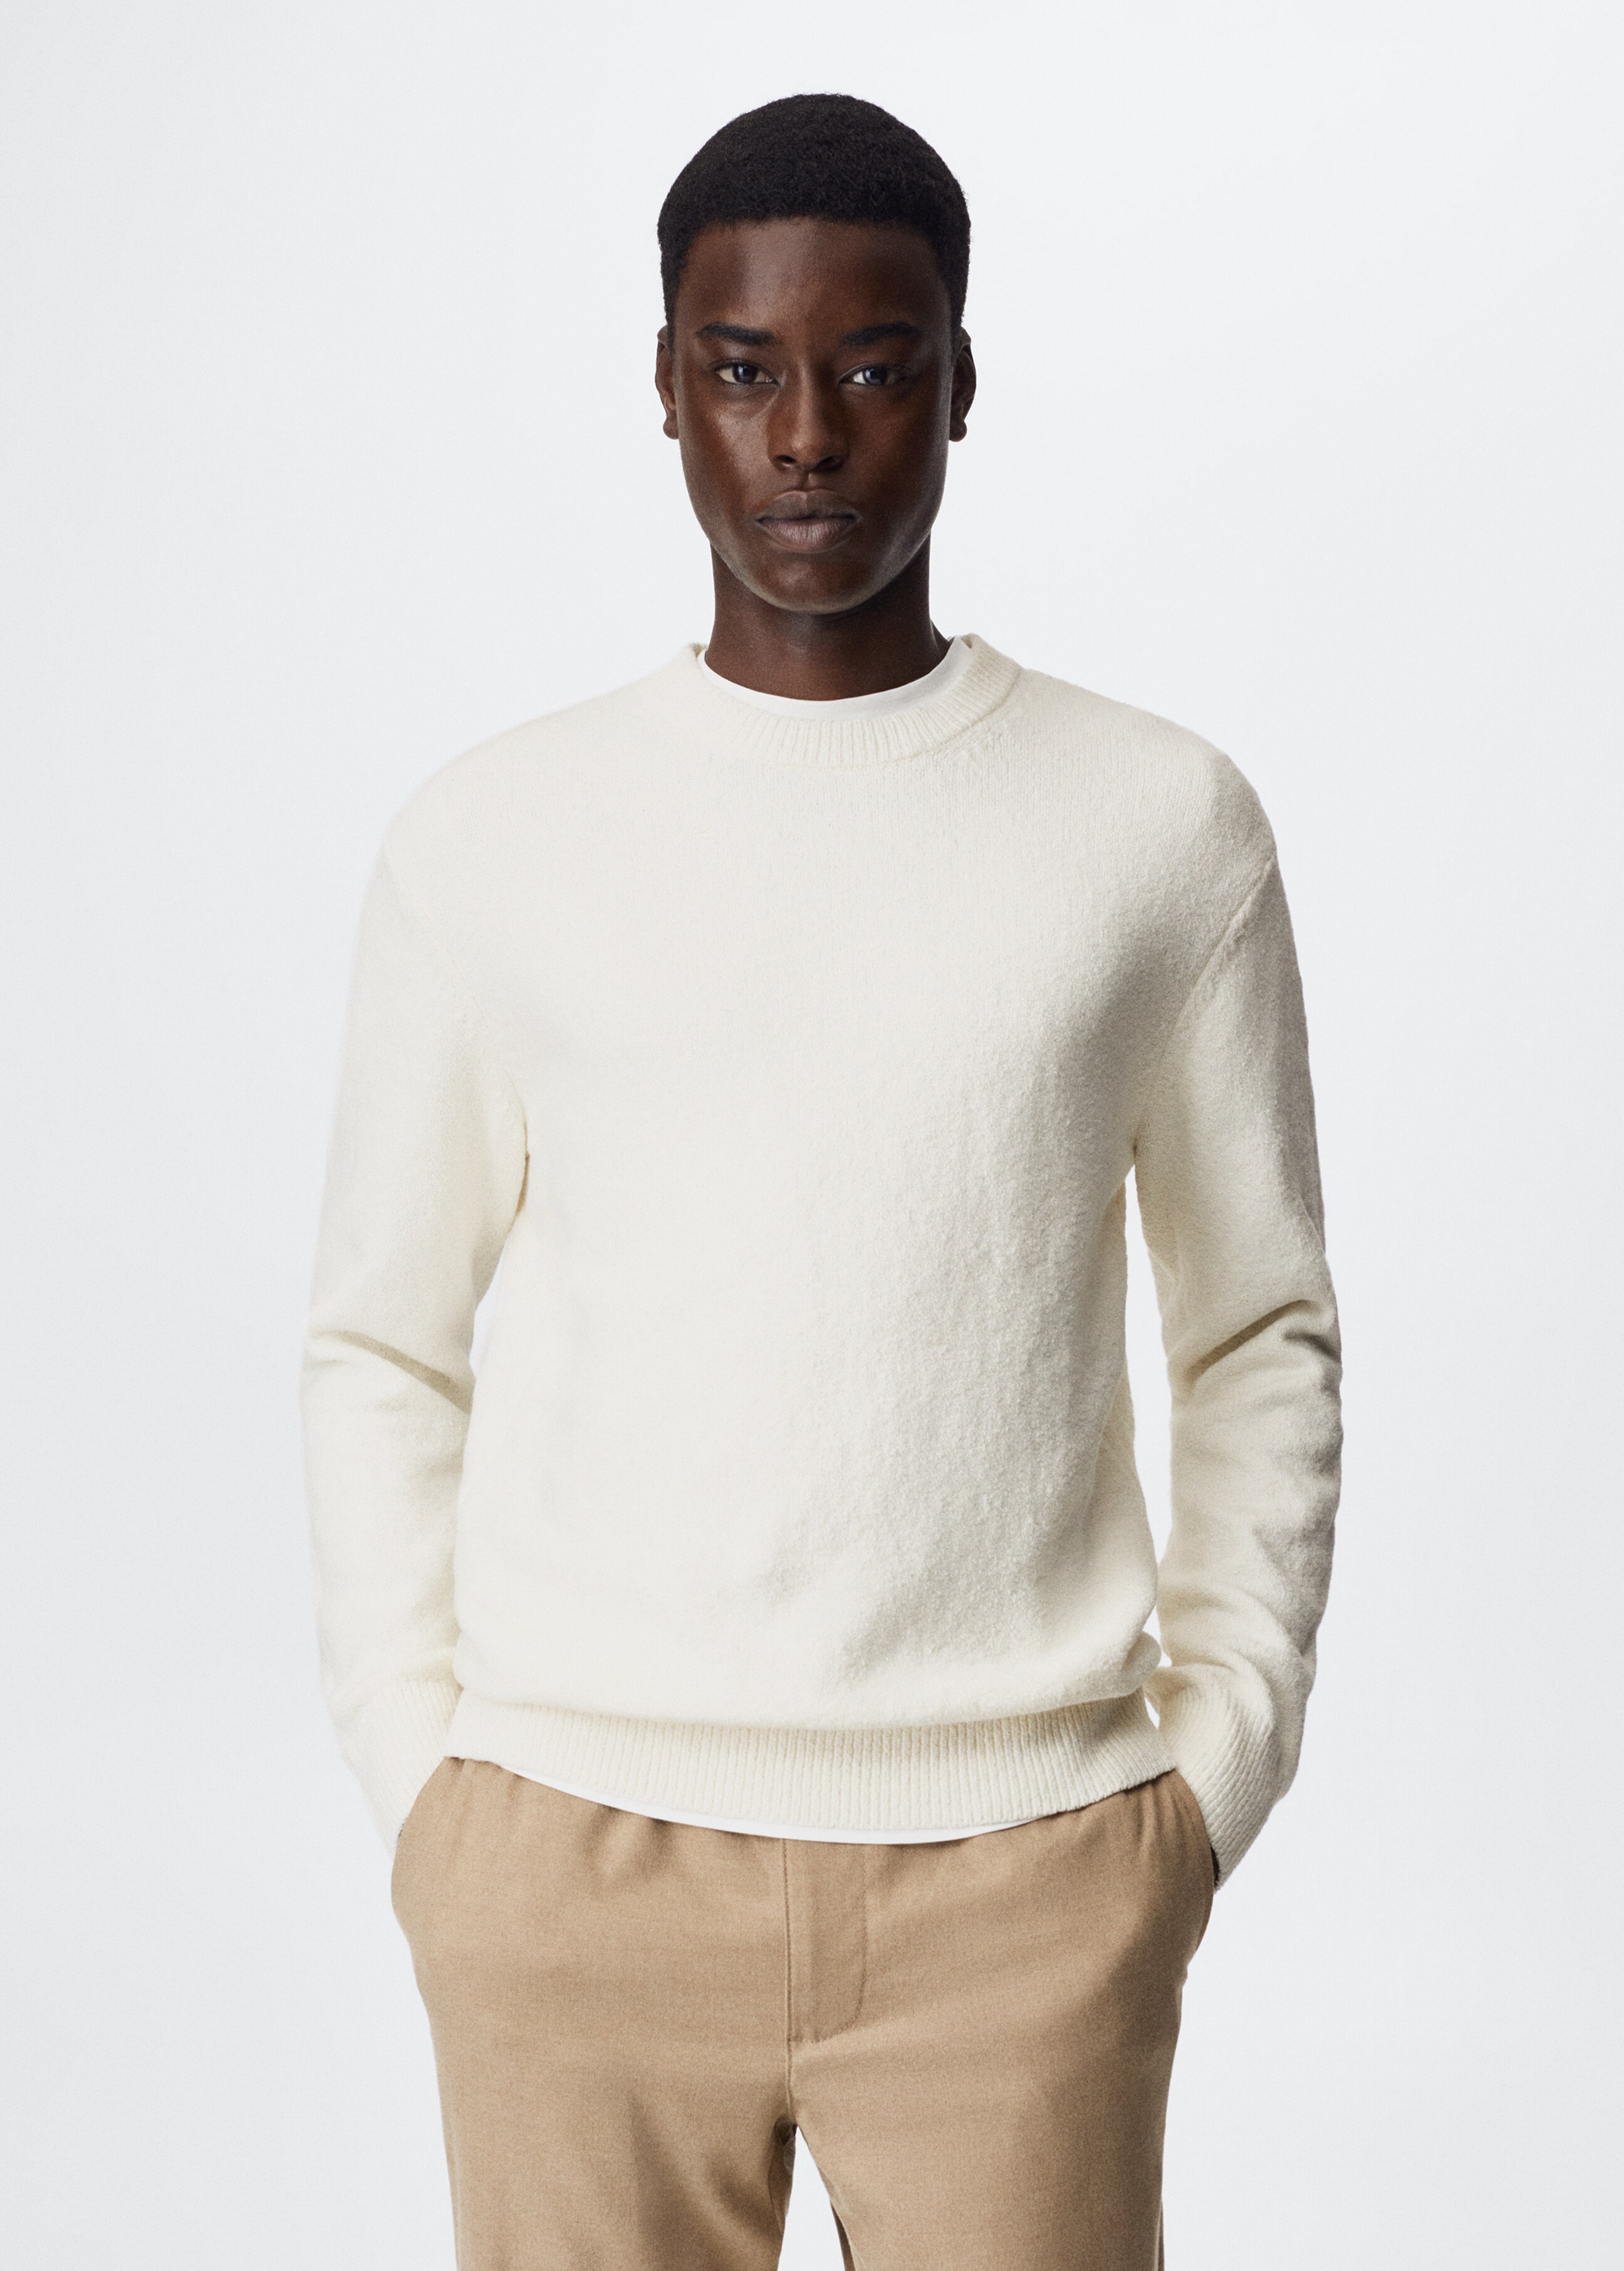 Textured cotton sweater - Medium plane